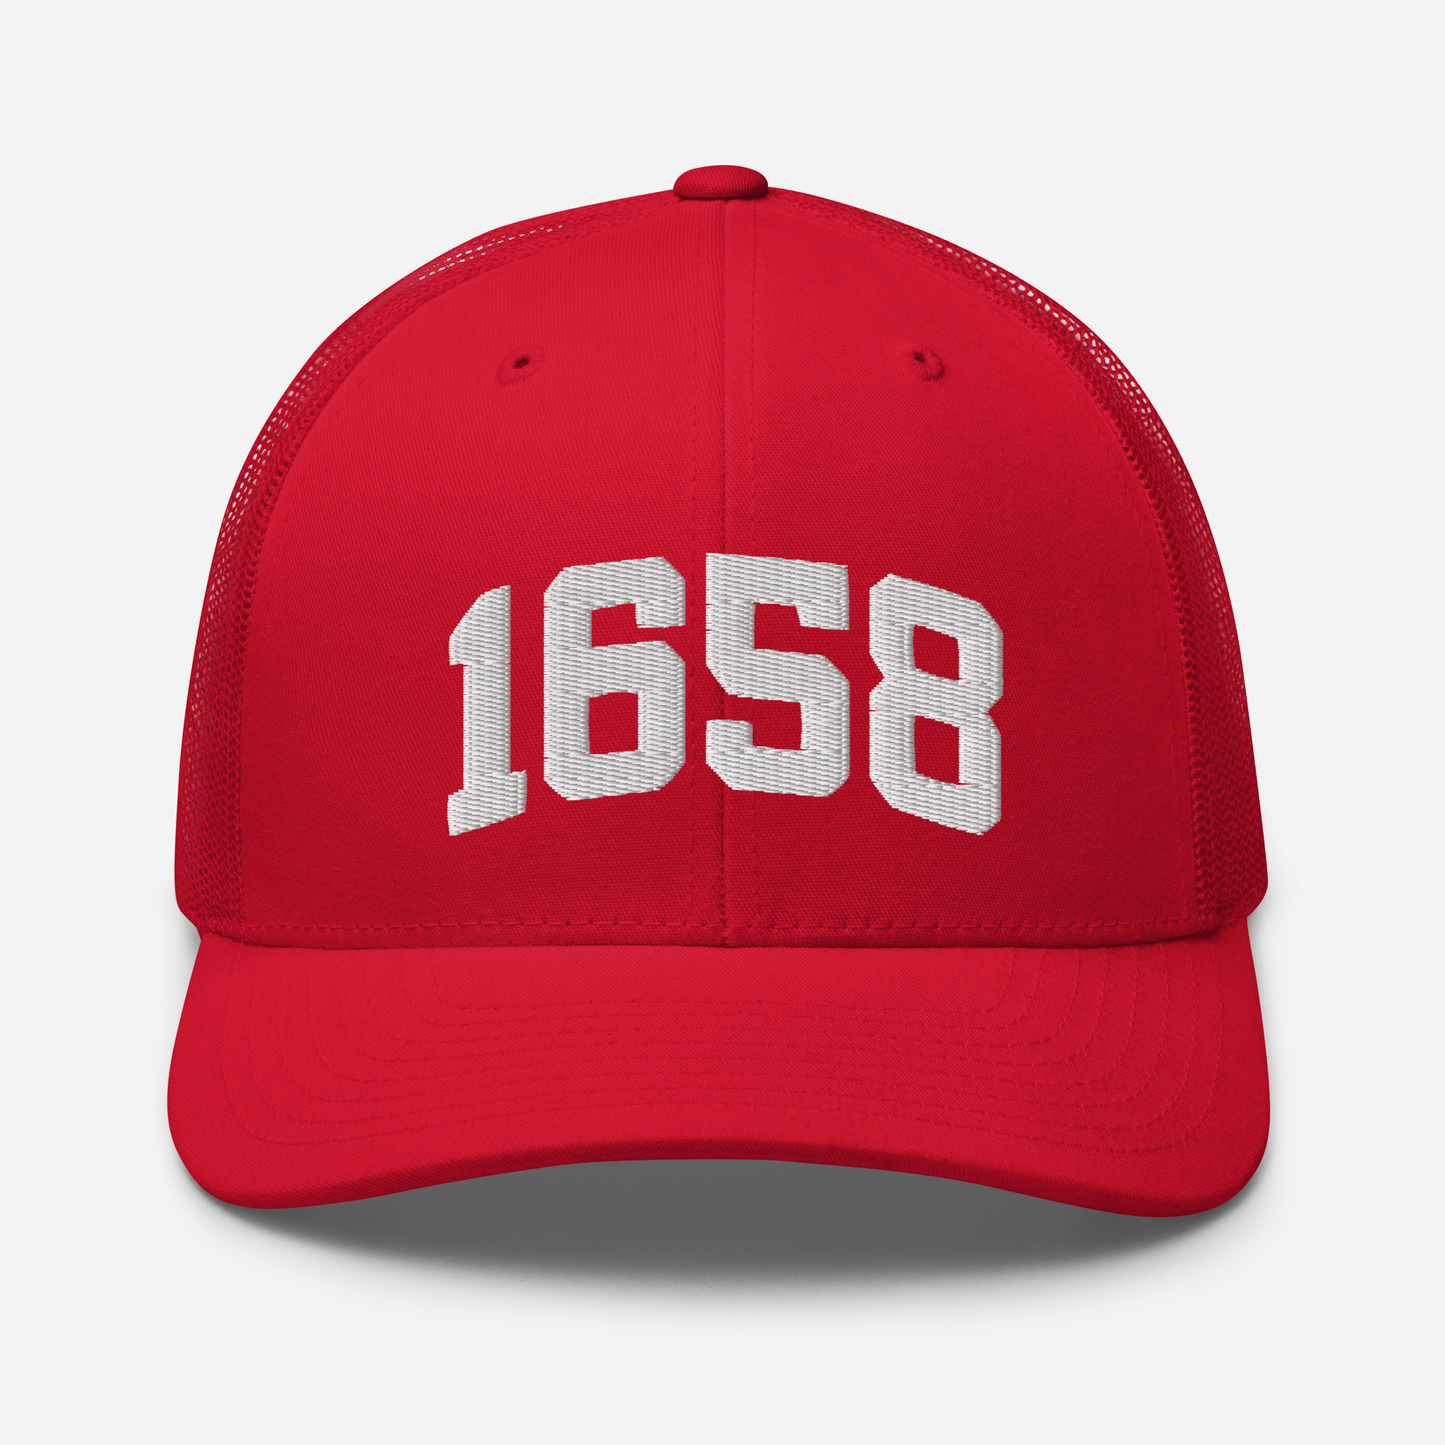 1658 Trucker Hat